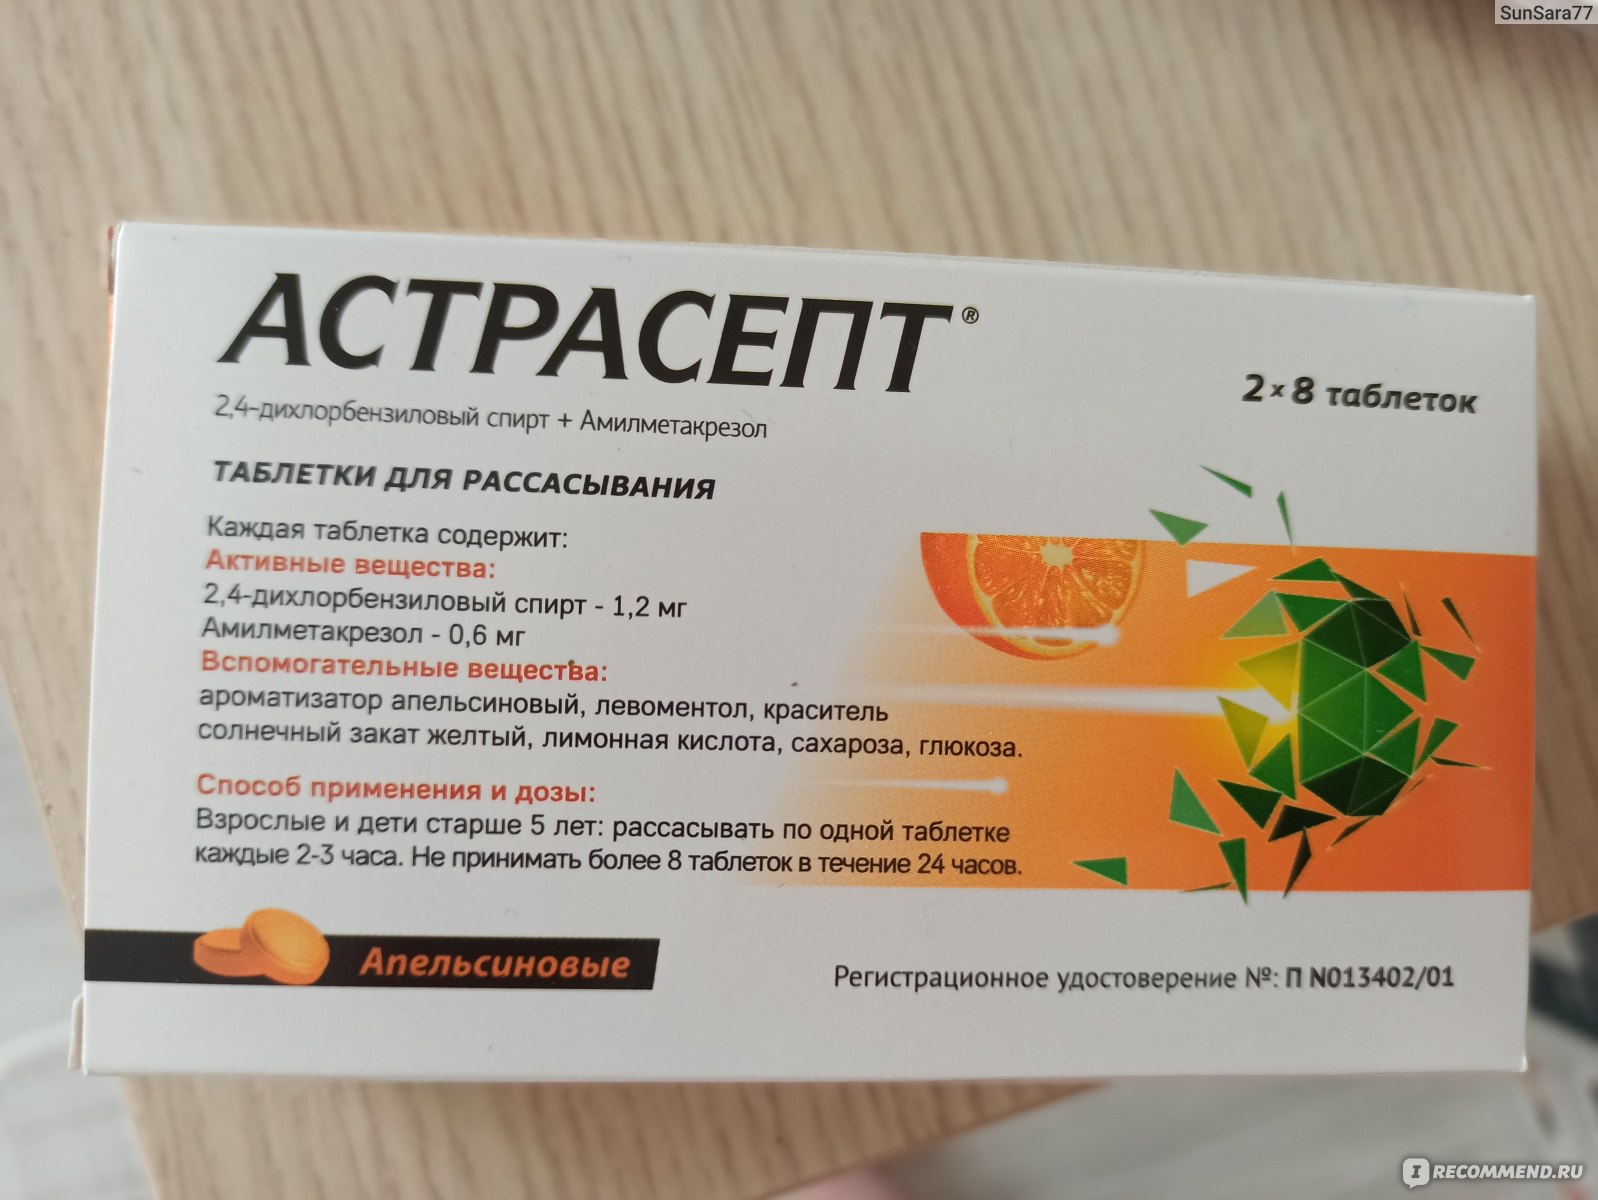 Лекарственный препарат «Максон Фармасьютикалз» Астрасепт - «Пастилки .